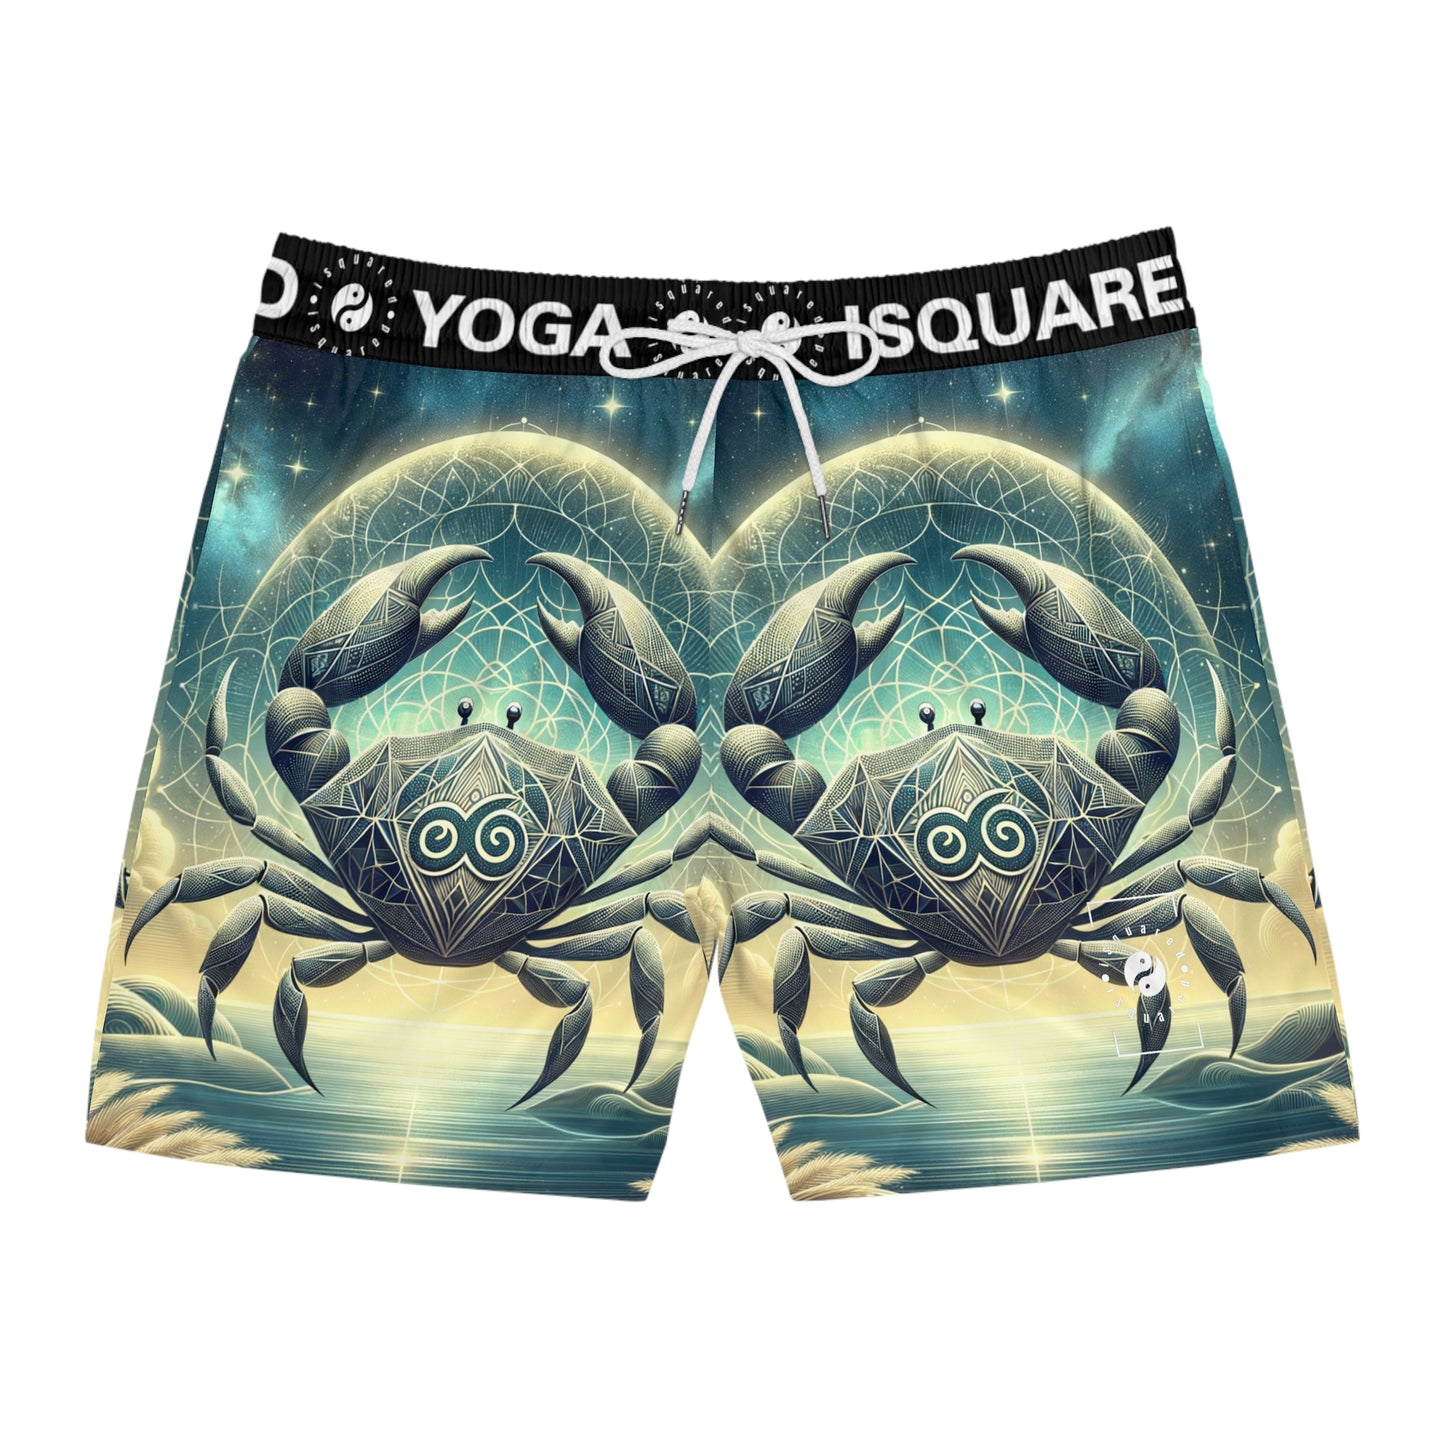 Crab Constellation Yoga - Swim Shorts (Mid-Length) for Men